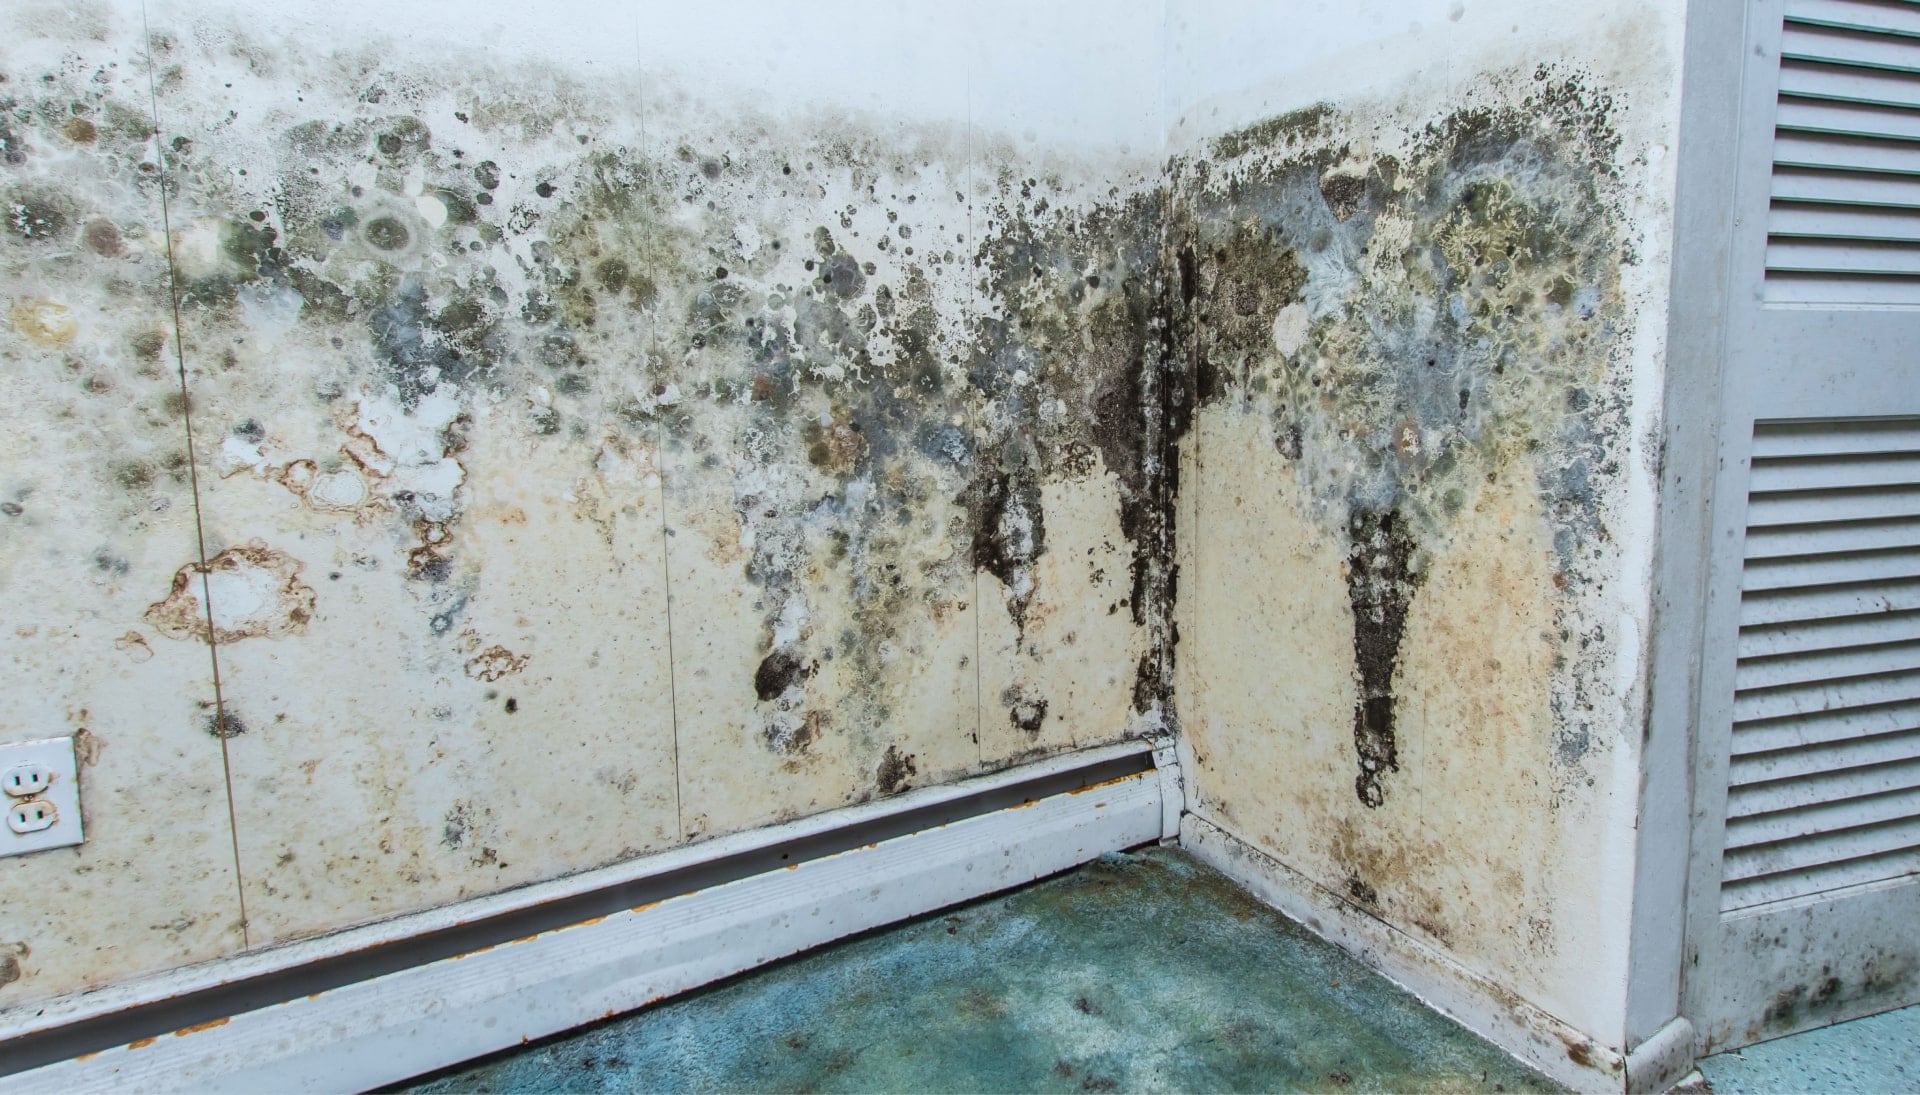 Professional mold removal, odor control, and water damage restoration service in Marietta, Georgia.